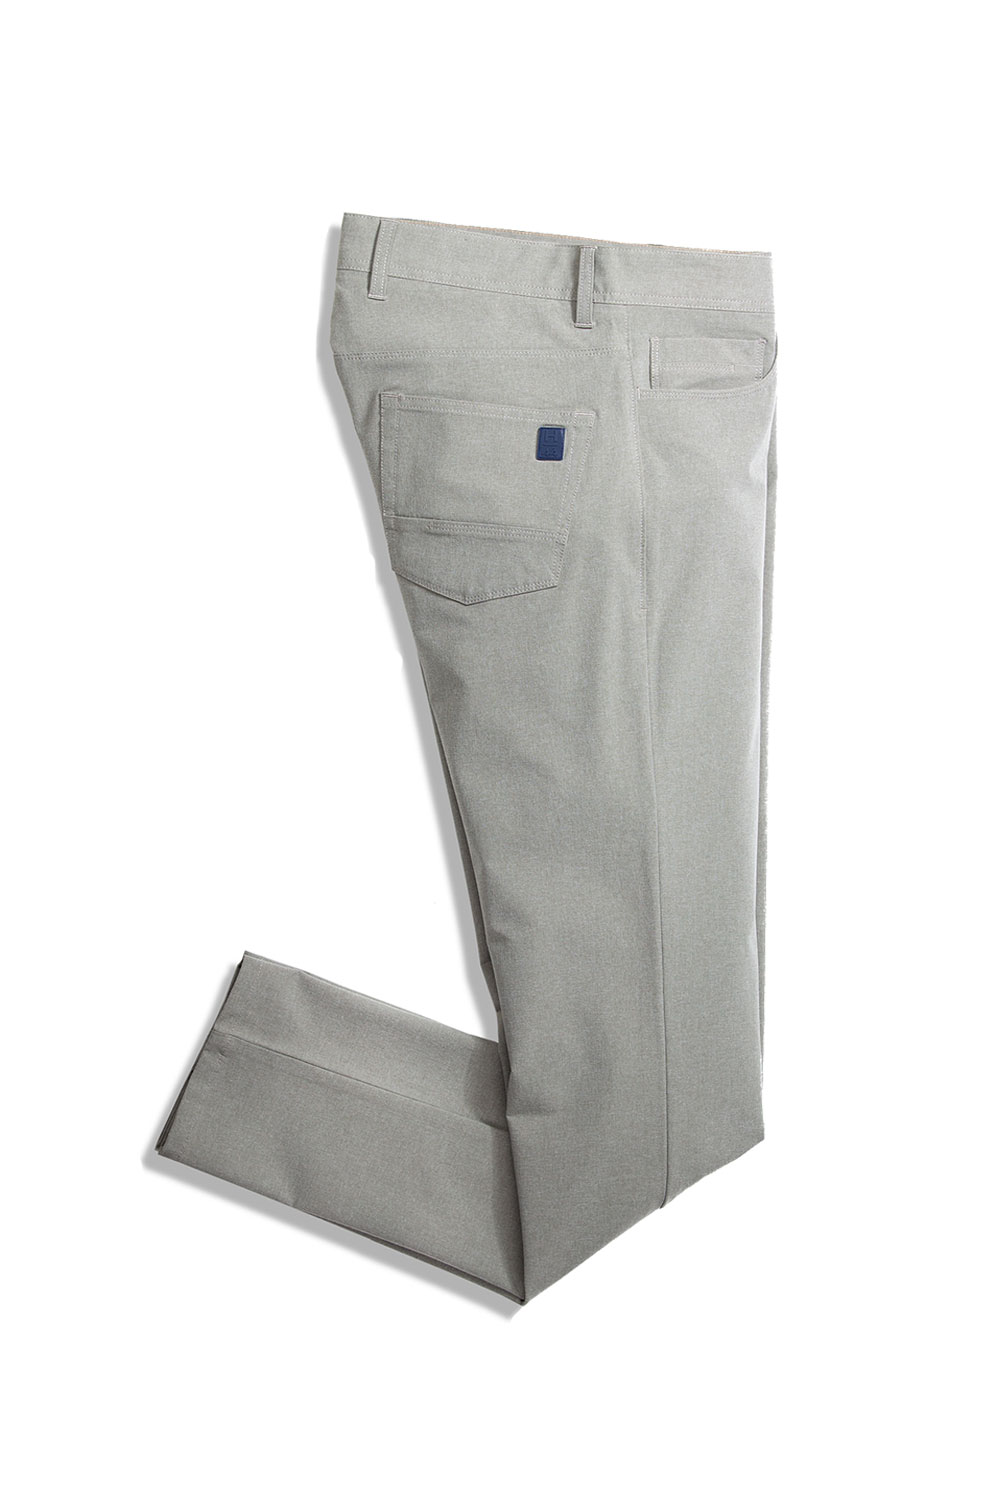 5 Pocket Pants - Exclusive Sports Pants for Men